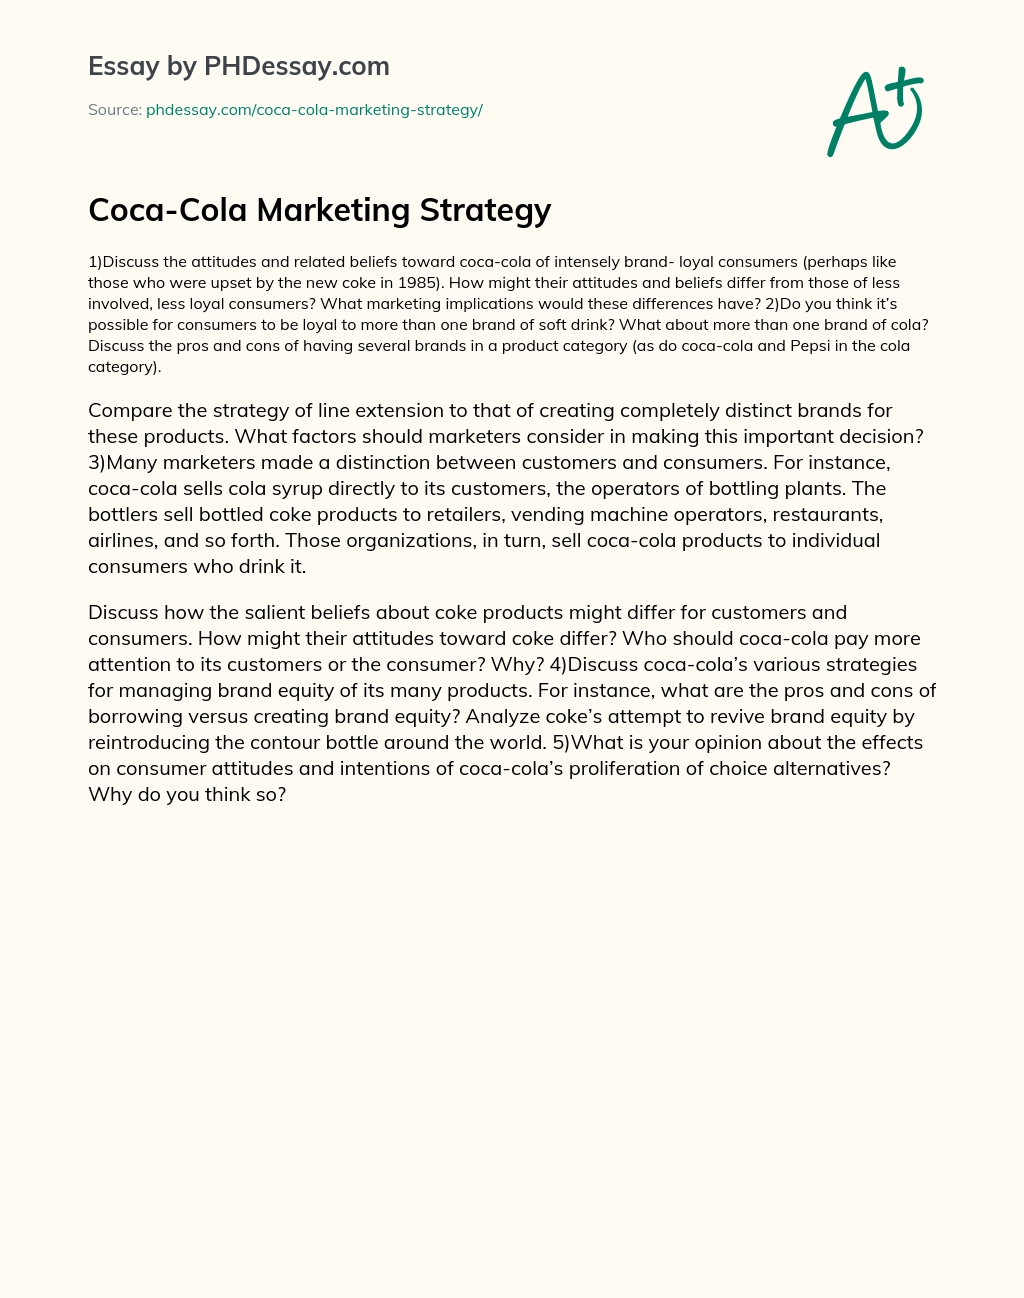 Coca-Cola Marketing Strategy essay